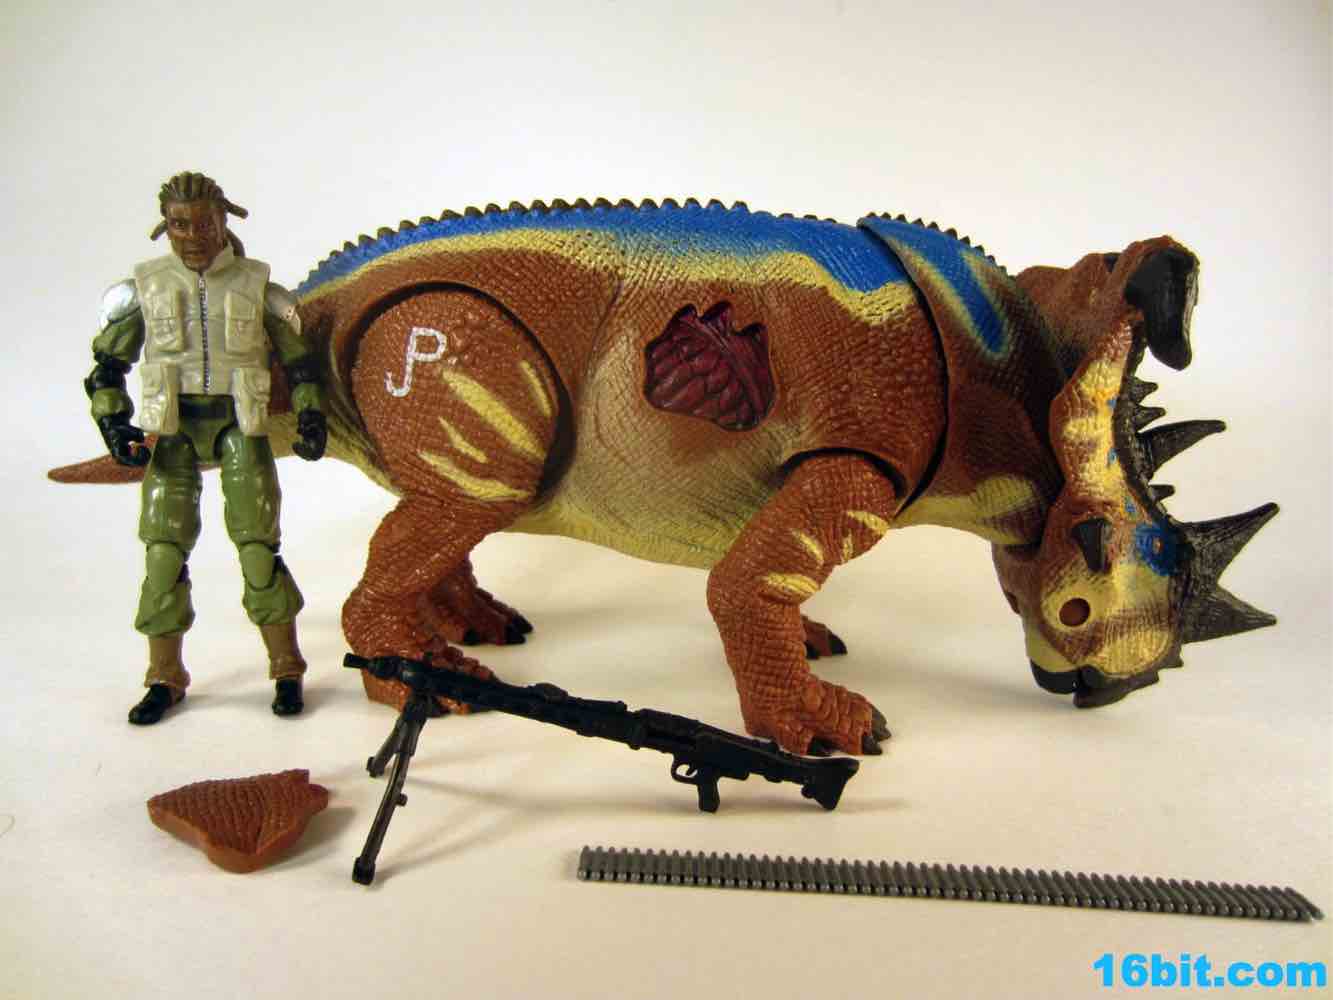 Pachyrhinosaurus 9" Jurassic Dinosaur Skull Model Fossil Replica Toy Collectible 